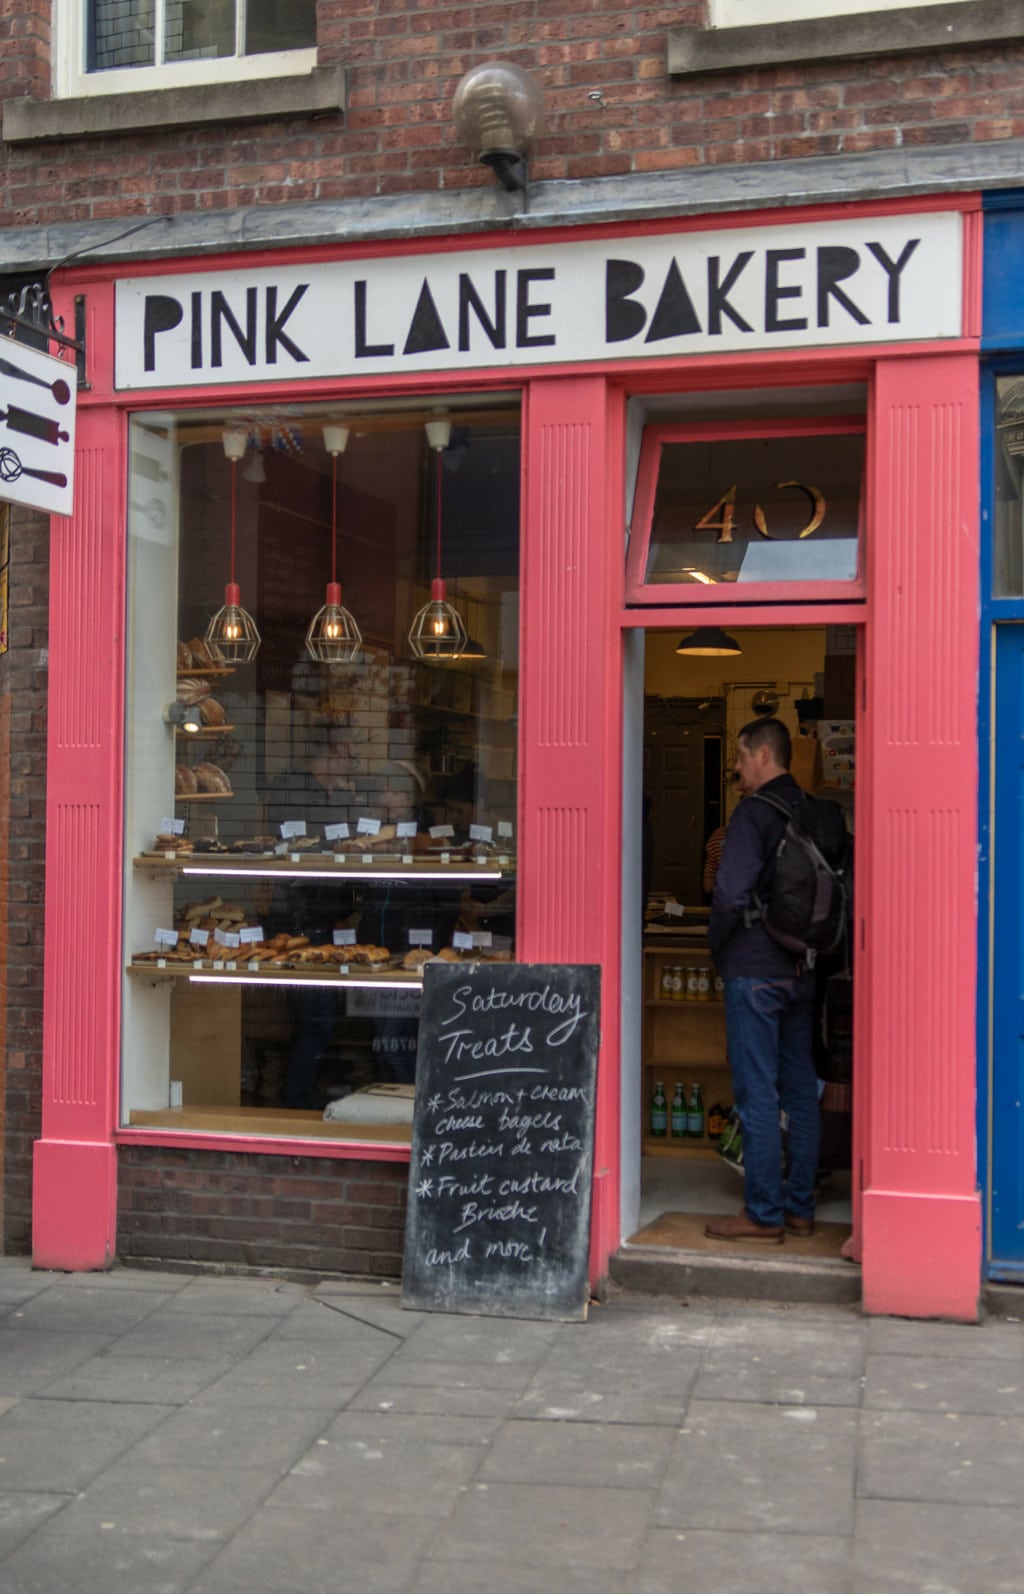 Pink Lane Bakery in Newcastle upon Tyne